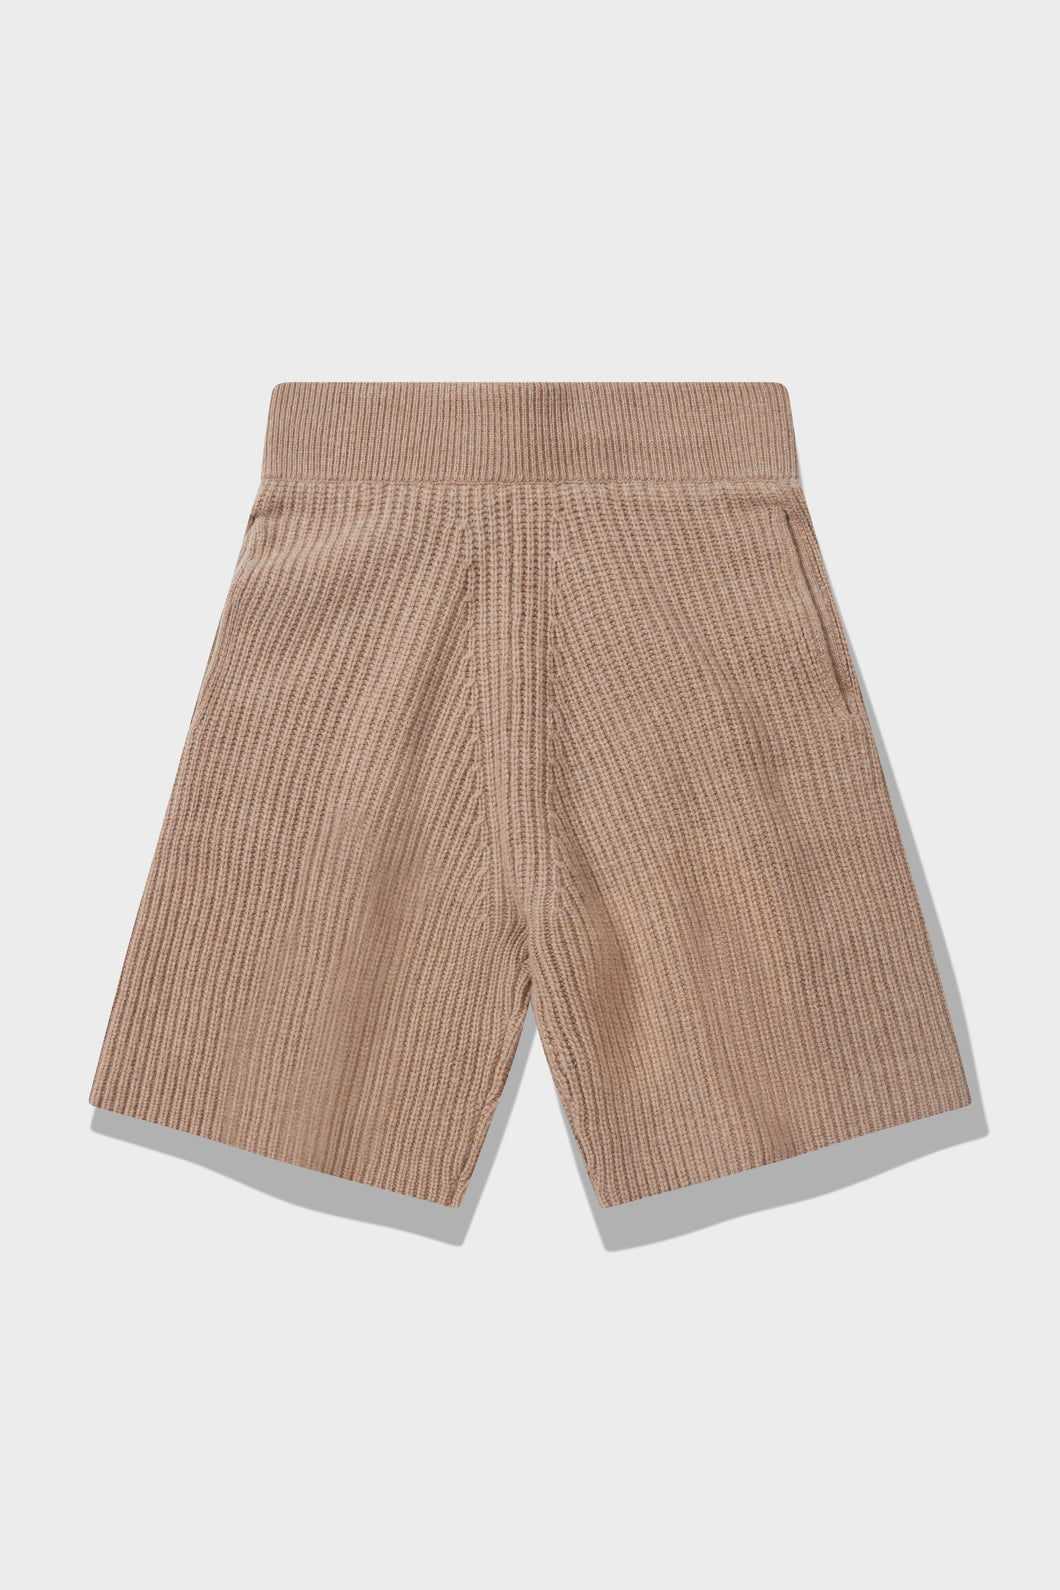 Altuzarra_Knit Shorts-Sandstorm